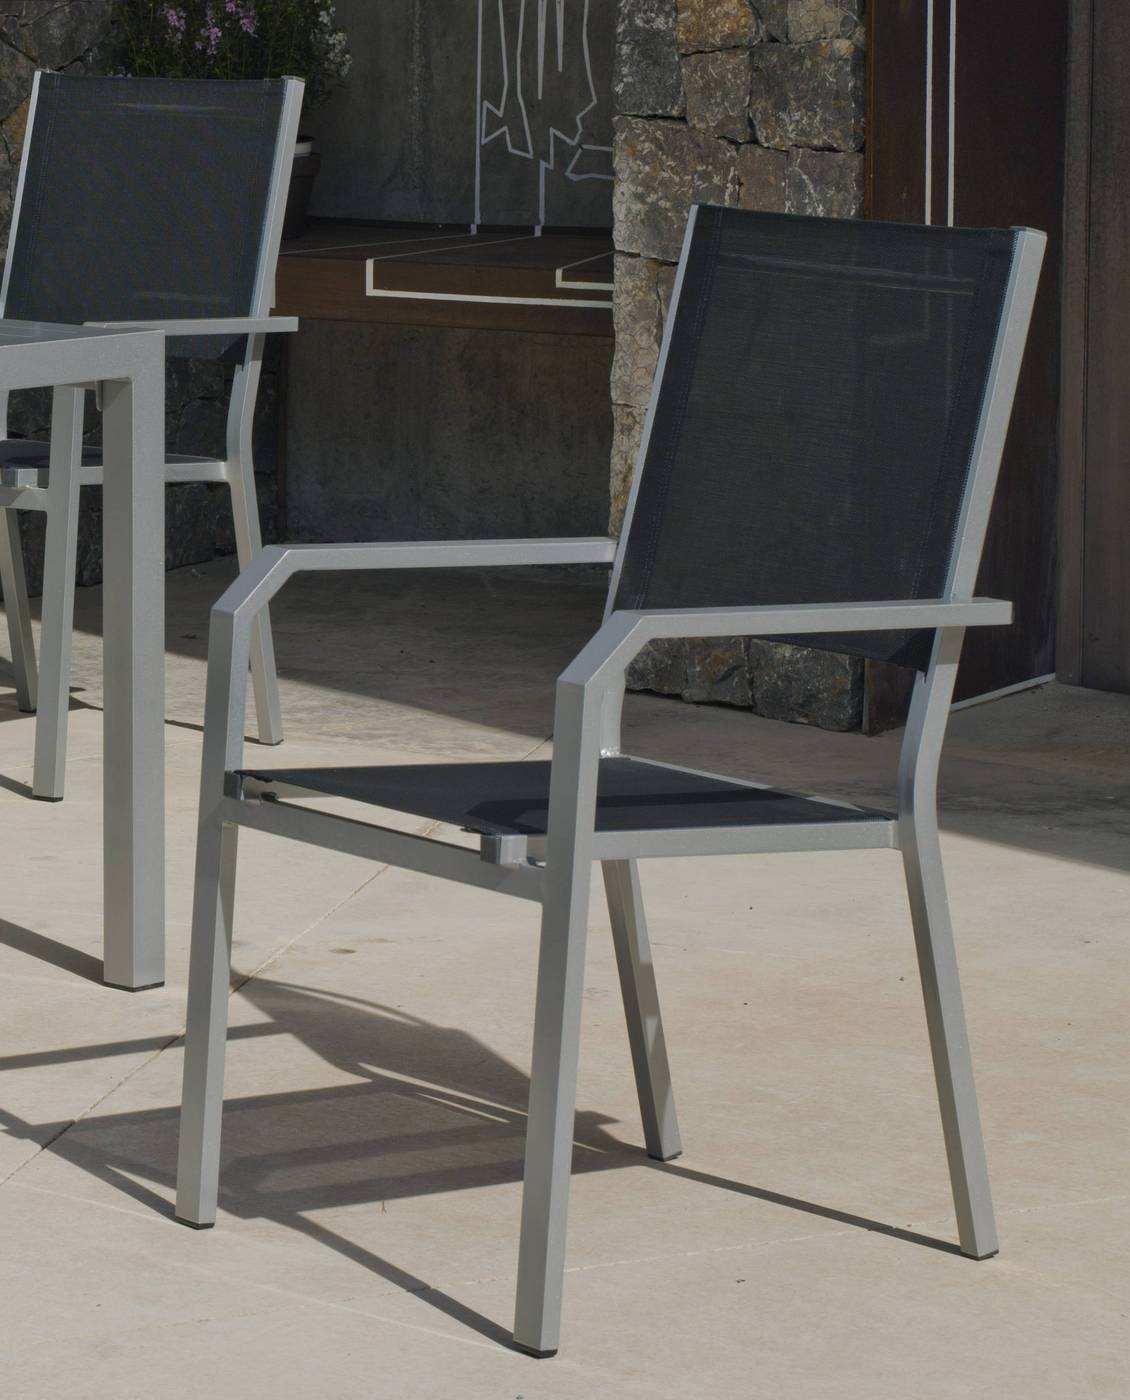 Set Aluminio Palma-Gema 90-4 - Conjunto aluminio luxe: Mesa cuadrada 90 cm + 4 sillones de textilen. Disponible en color blanco, antracita, champagne, plata o marrón.